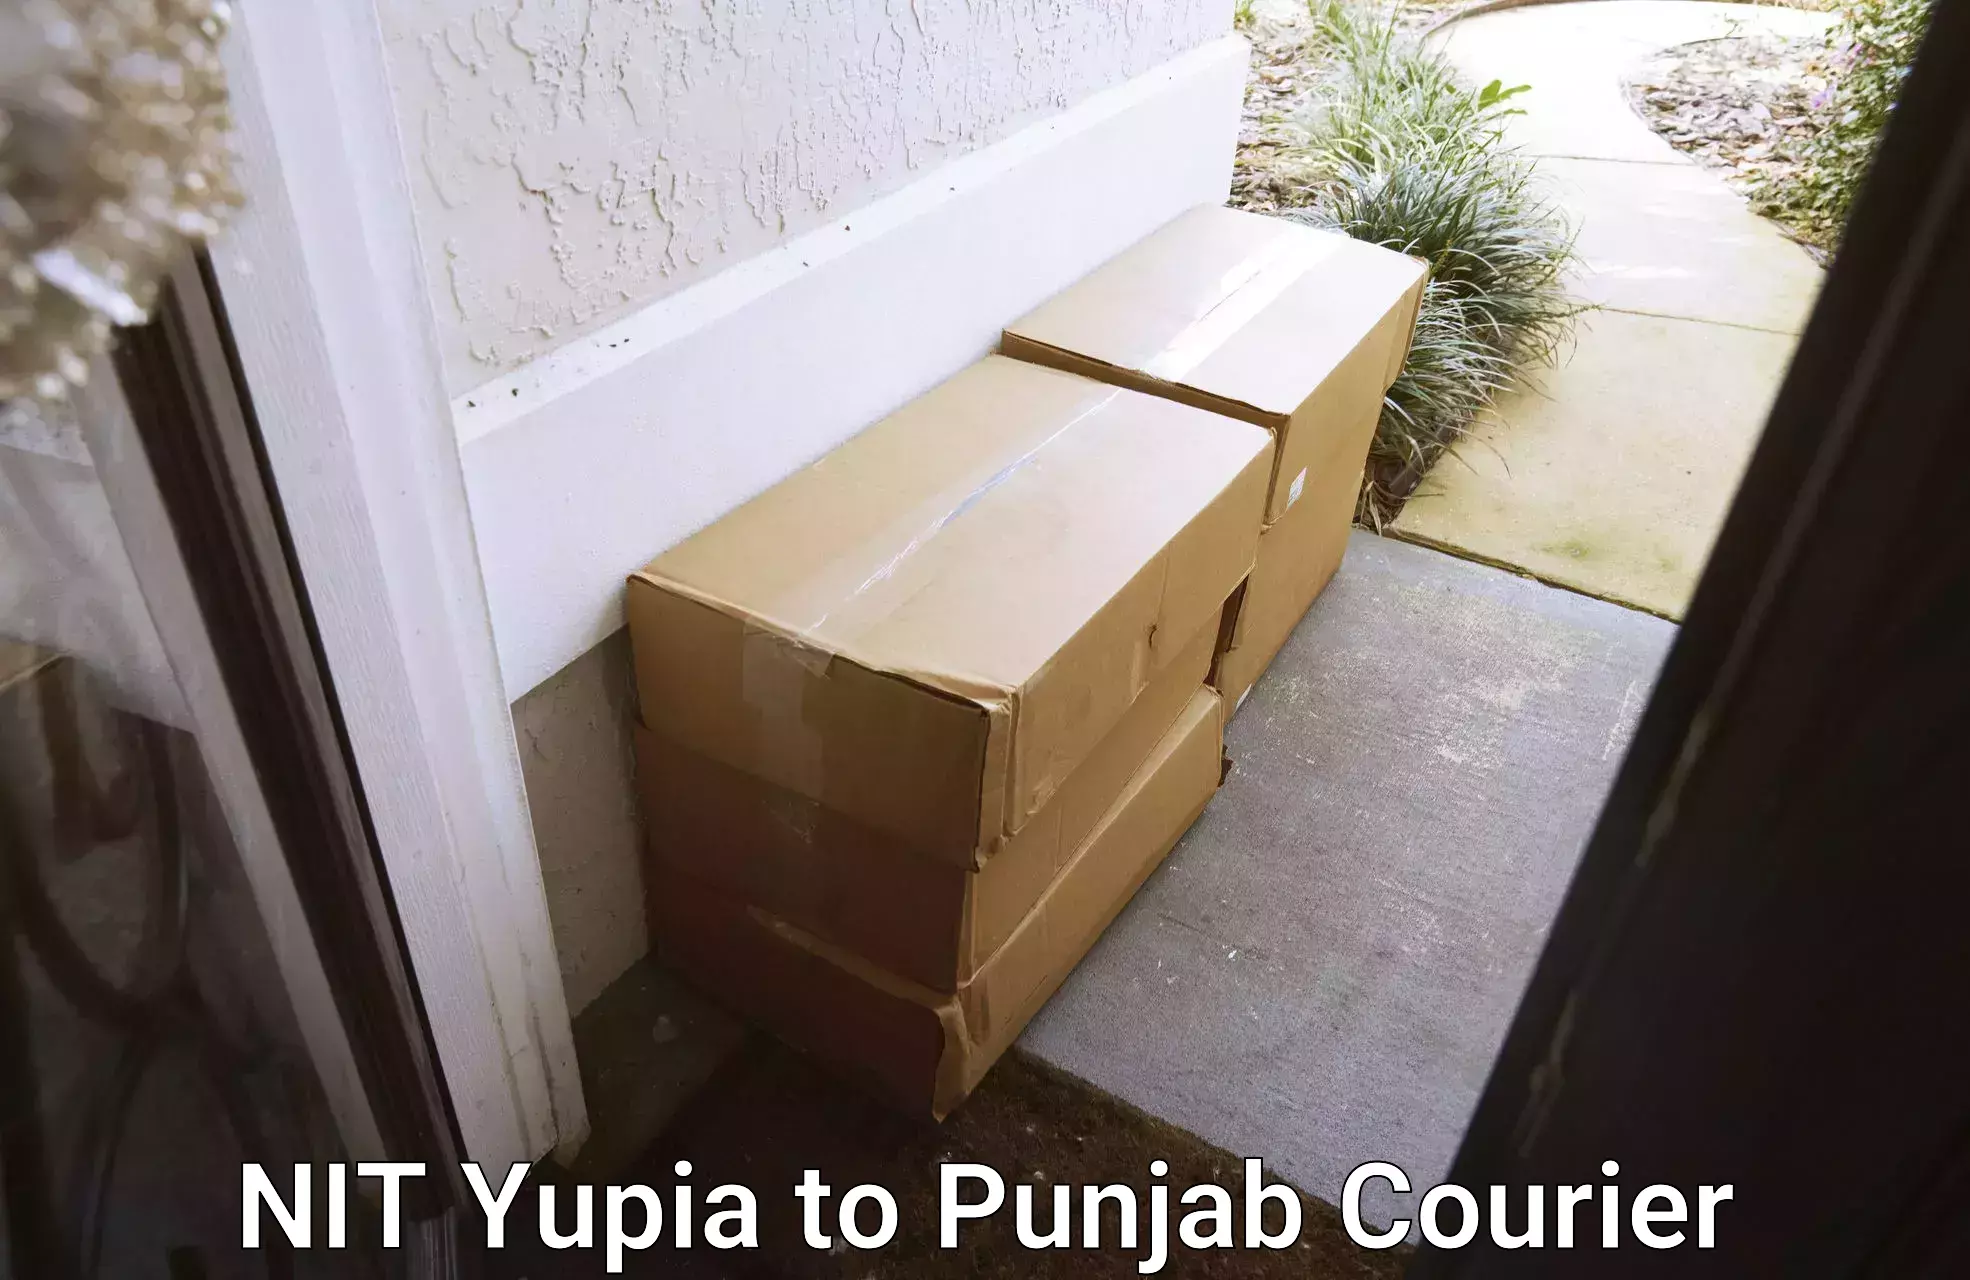 Quick dispatch service NIT Yupia to Sultanpur Lodhi